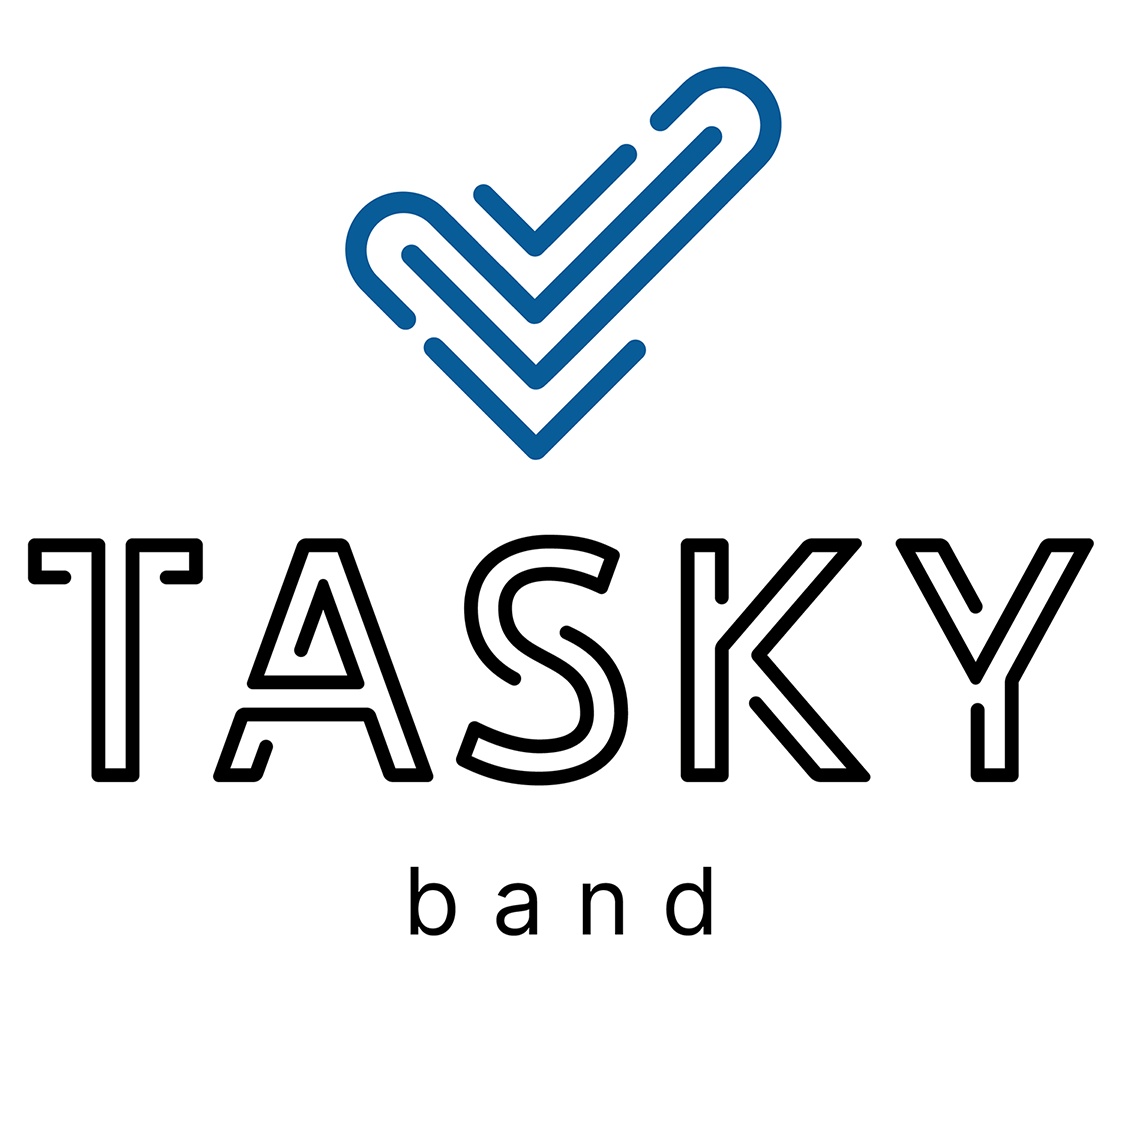 Tasky band